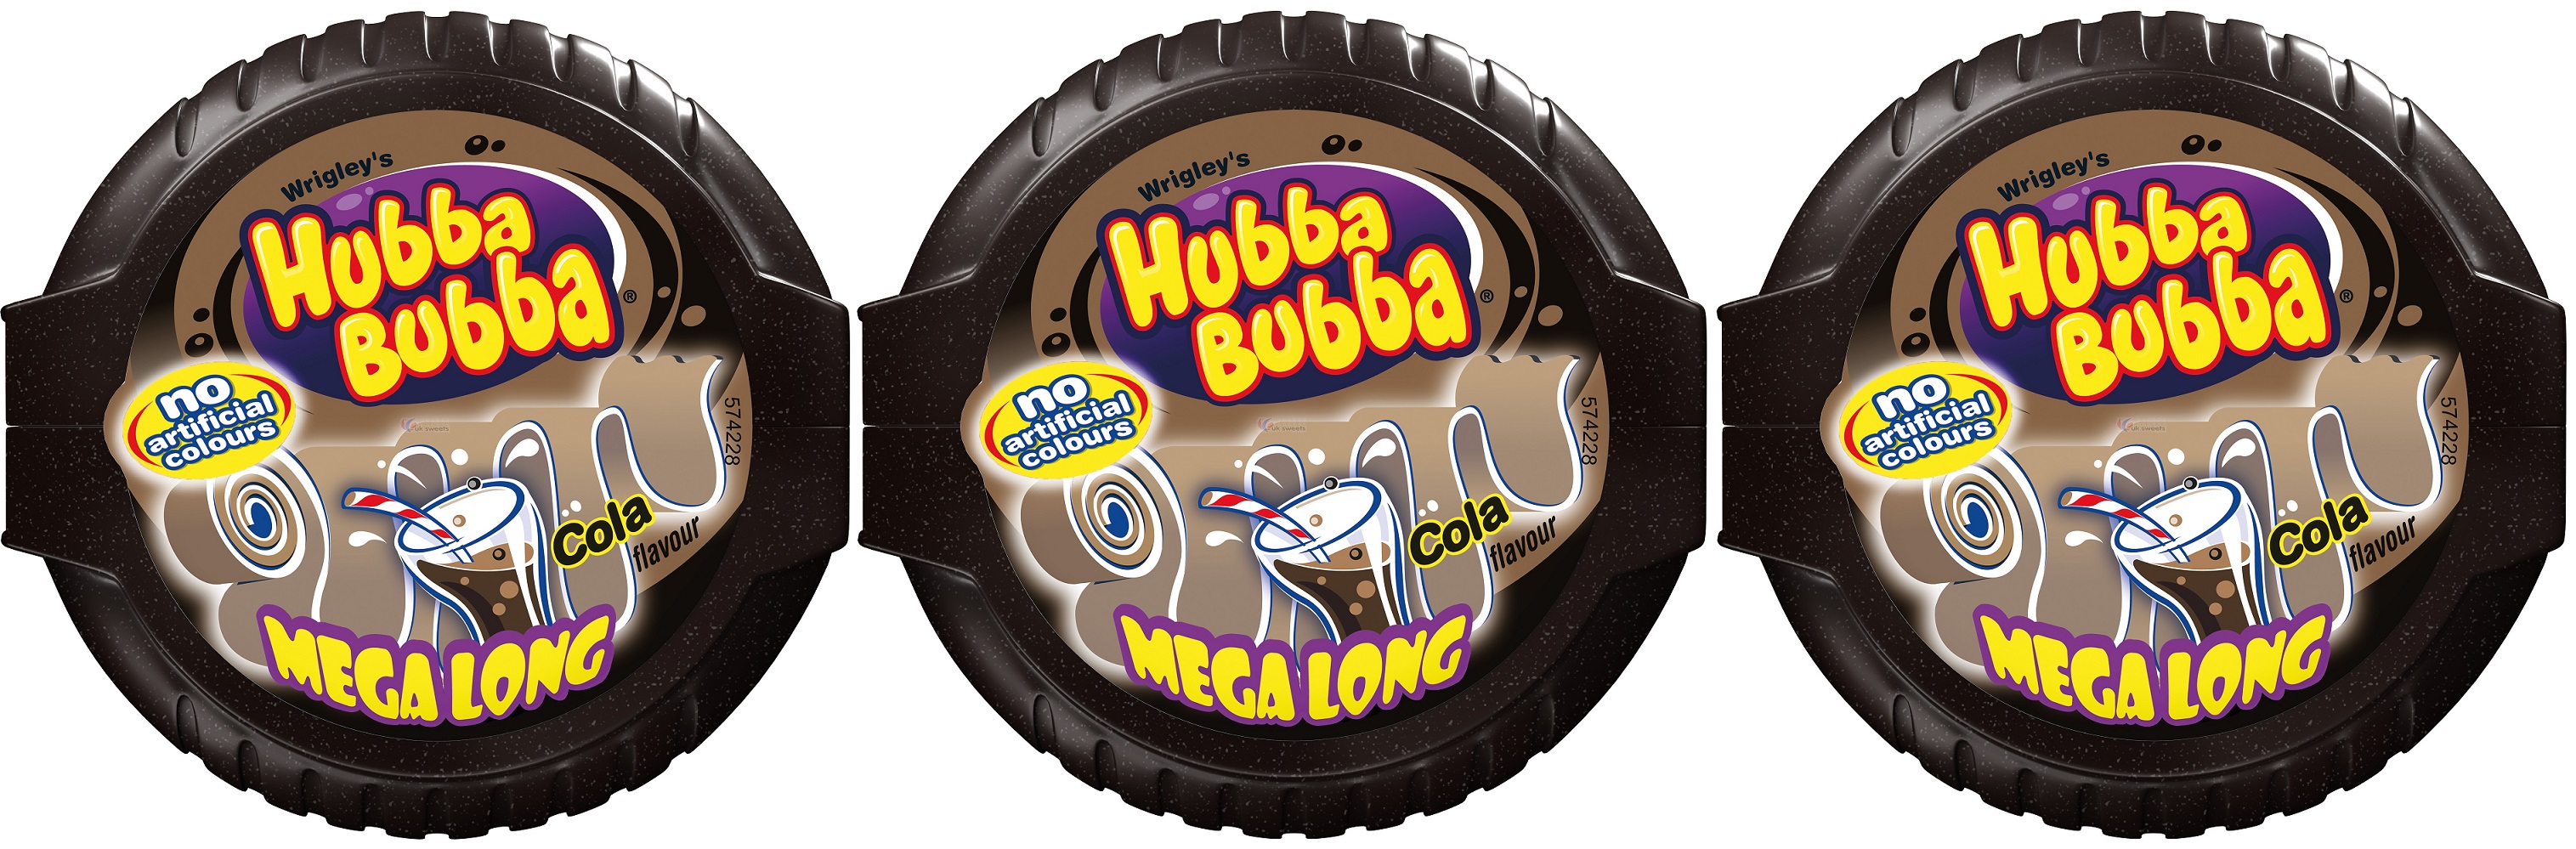 Жевательная резинка Wrigley's Hubba Bubba Cola лента 56г х 3 шт